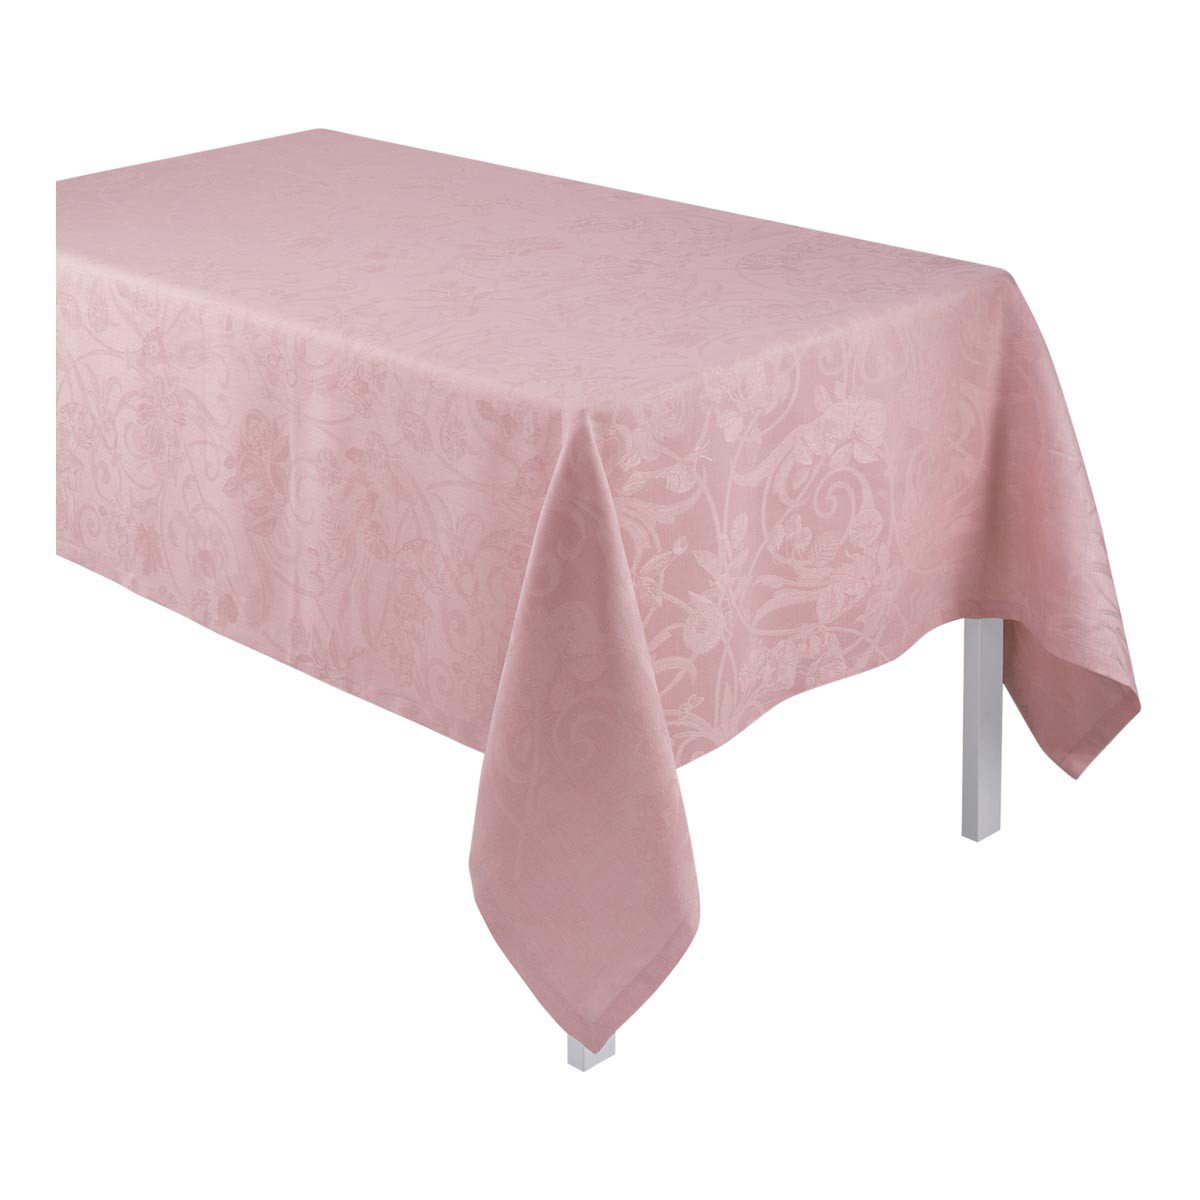 Le Jacquard Français Table Linen Tivoli in Pink Fig Linens tablecloth